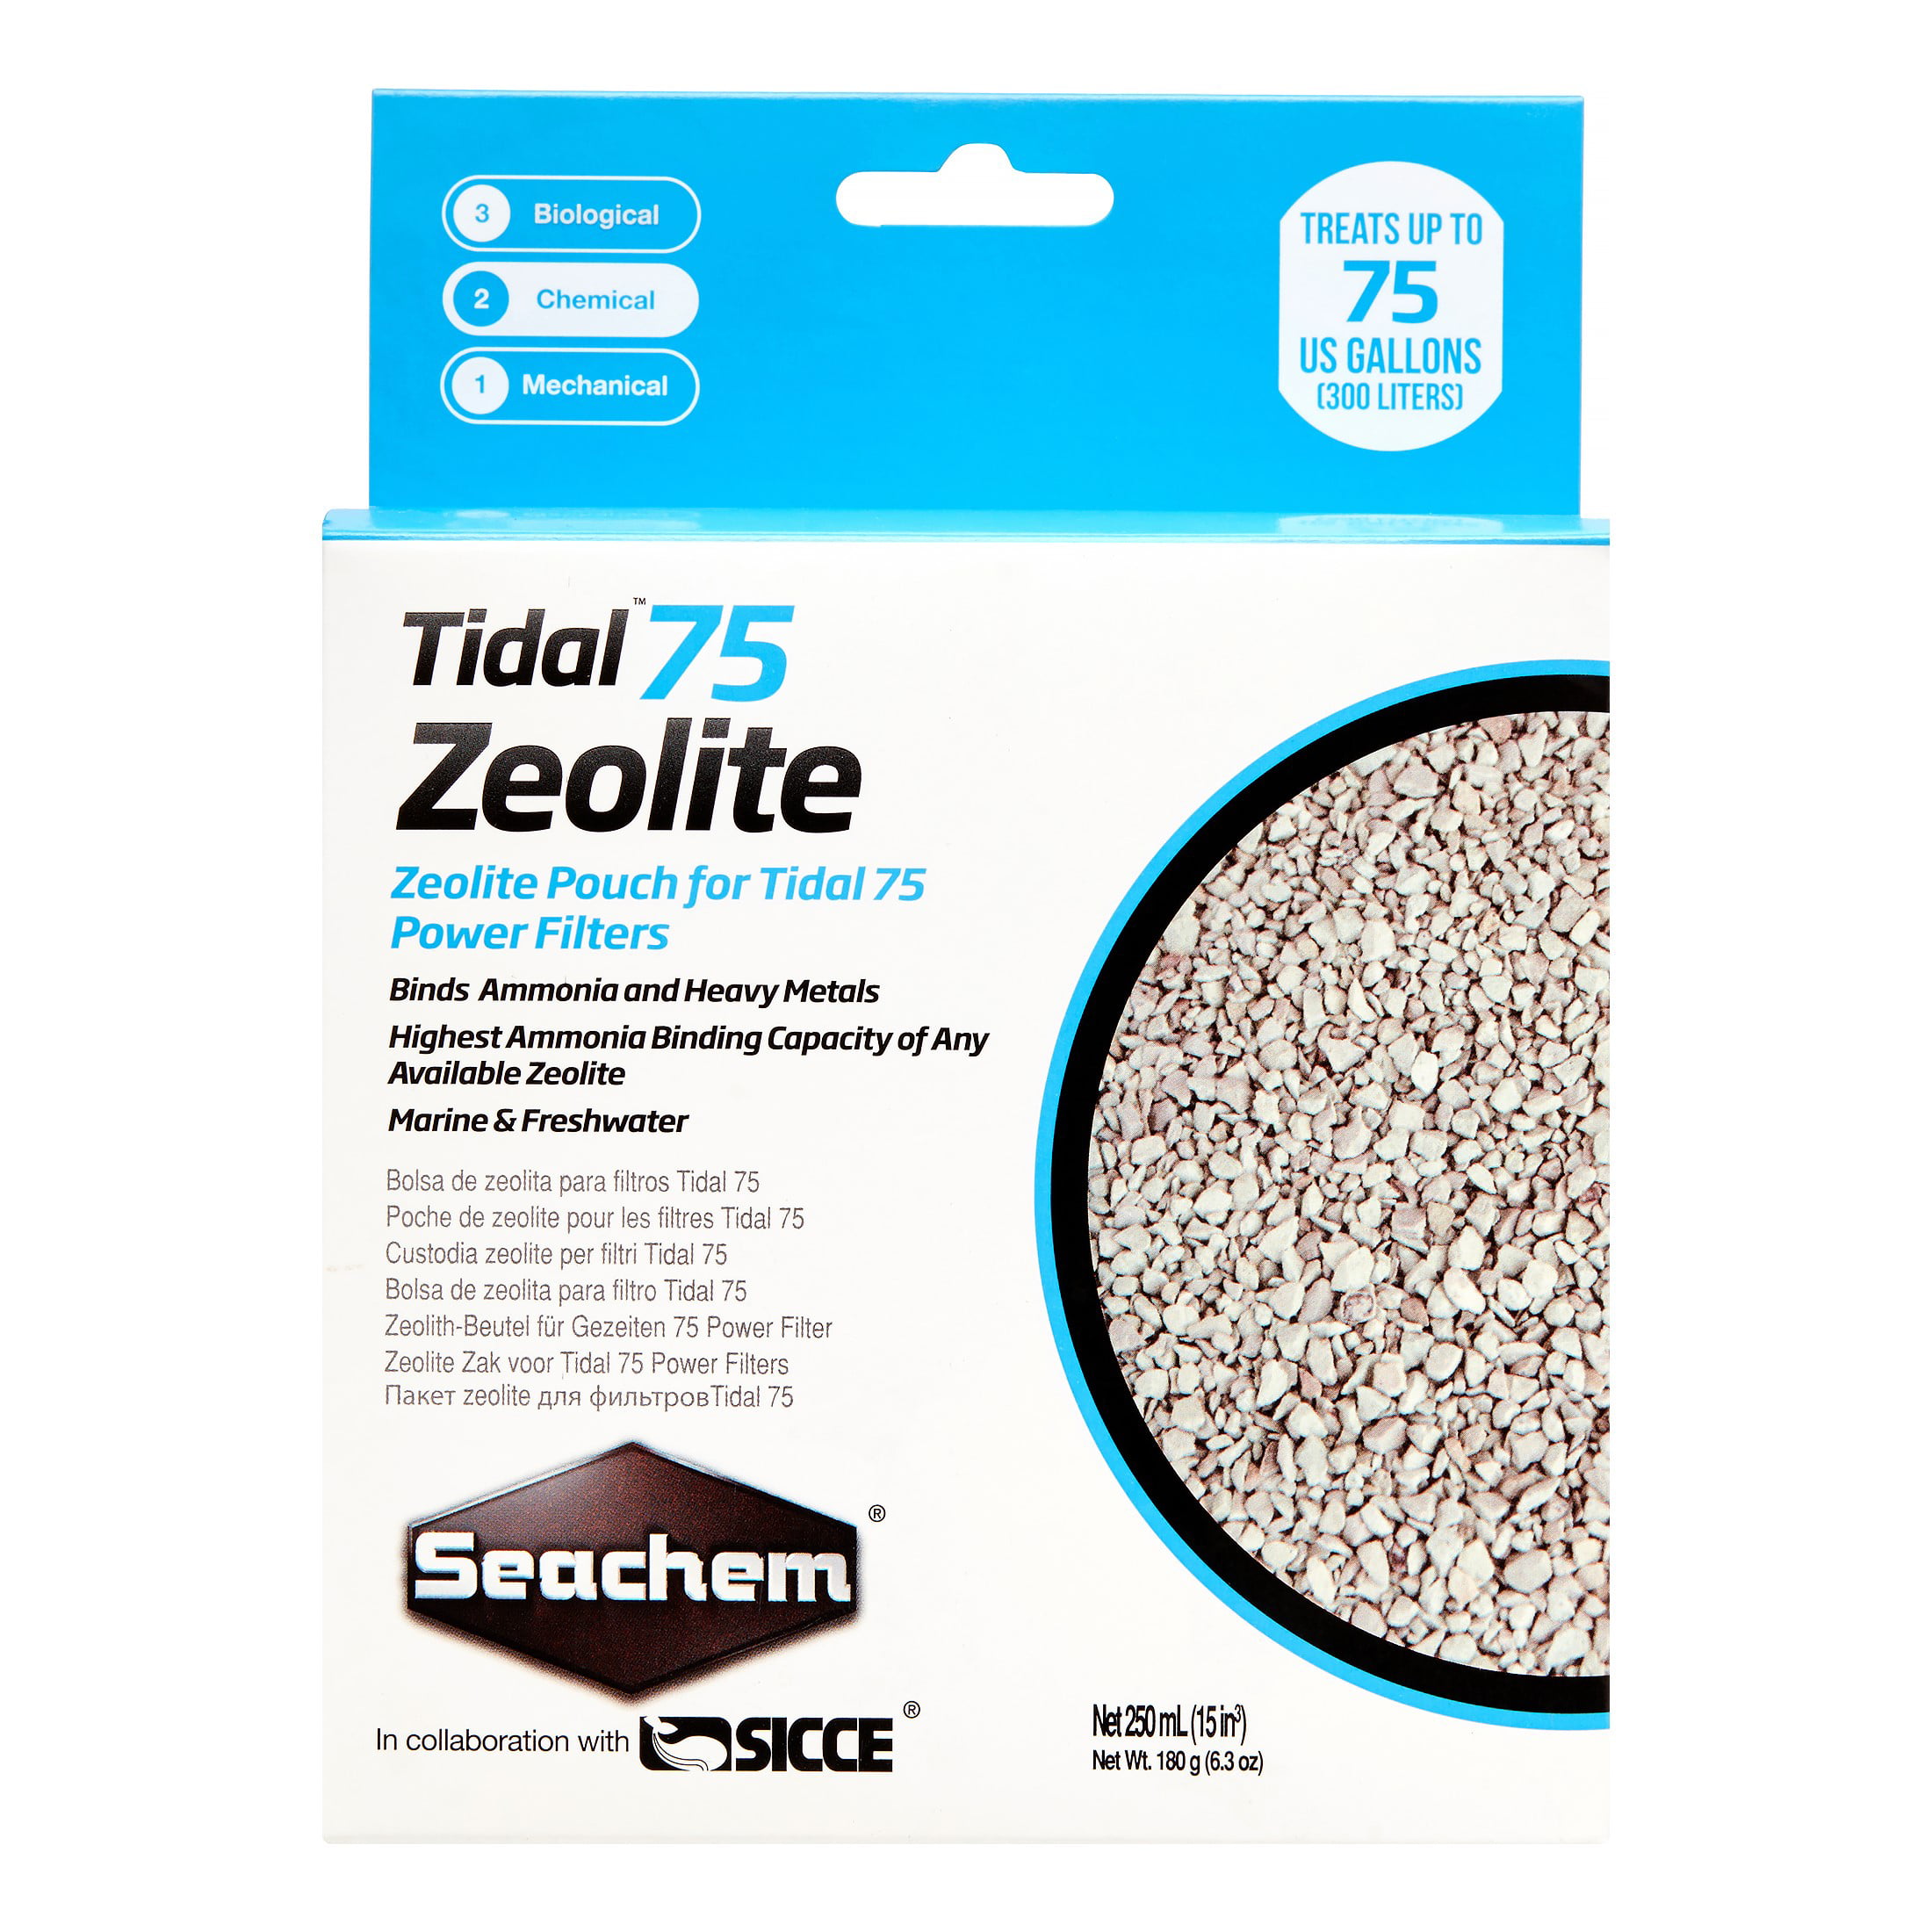 Tidal 110 Gallon Seachem 400 Liters Large Aquarium Fish Tank Filter by Sicce